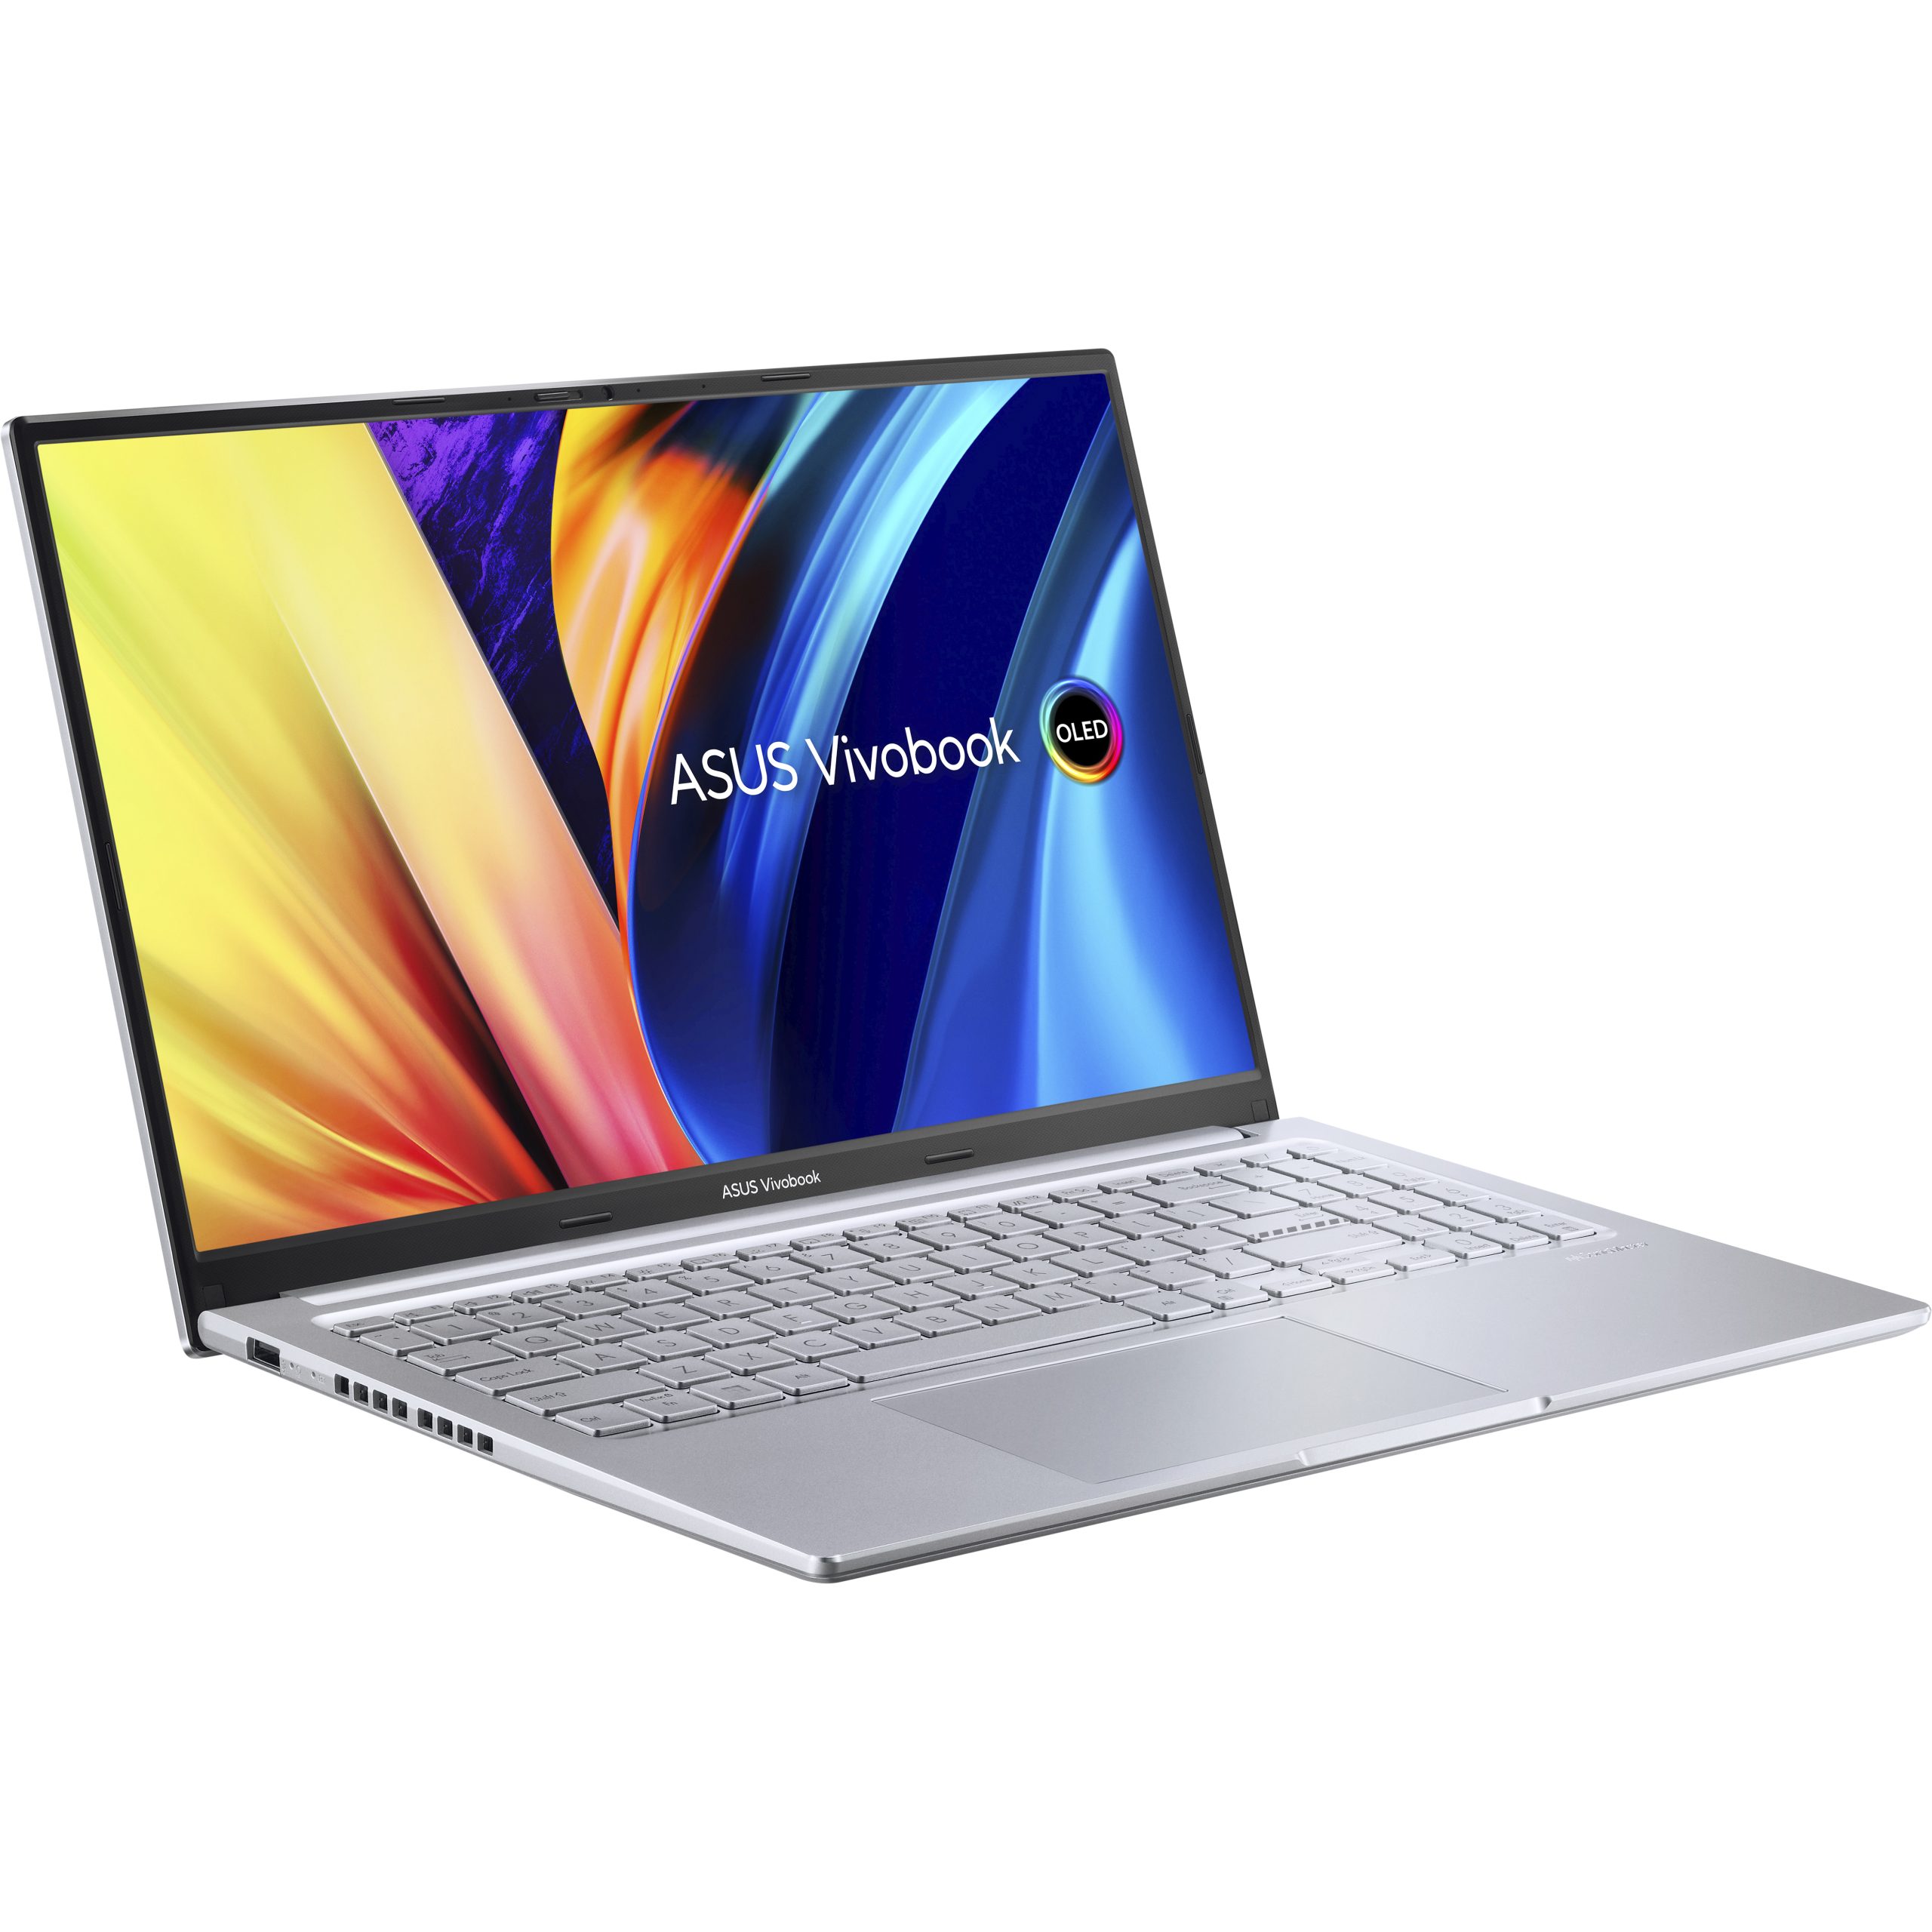 ASUS VivoBook S15 S533 Thin and Light Laptop, 15.6” FHD Display, Intel Core  i5-1135G7, 8GB DDR4 RAM, 512GB PCIe SSD, Wi-Fi 6, Windows 10 Home, AI